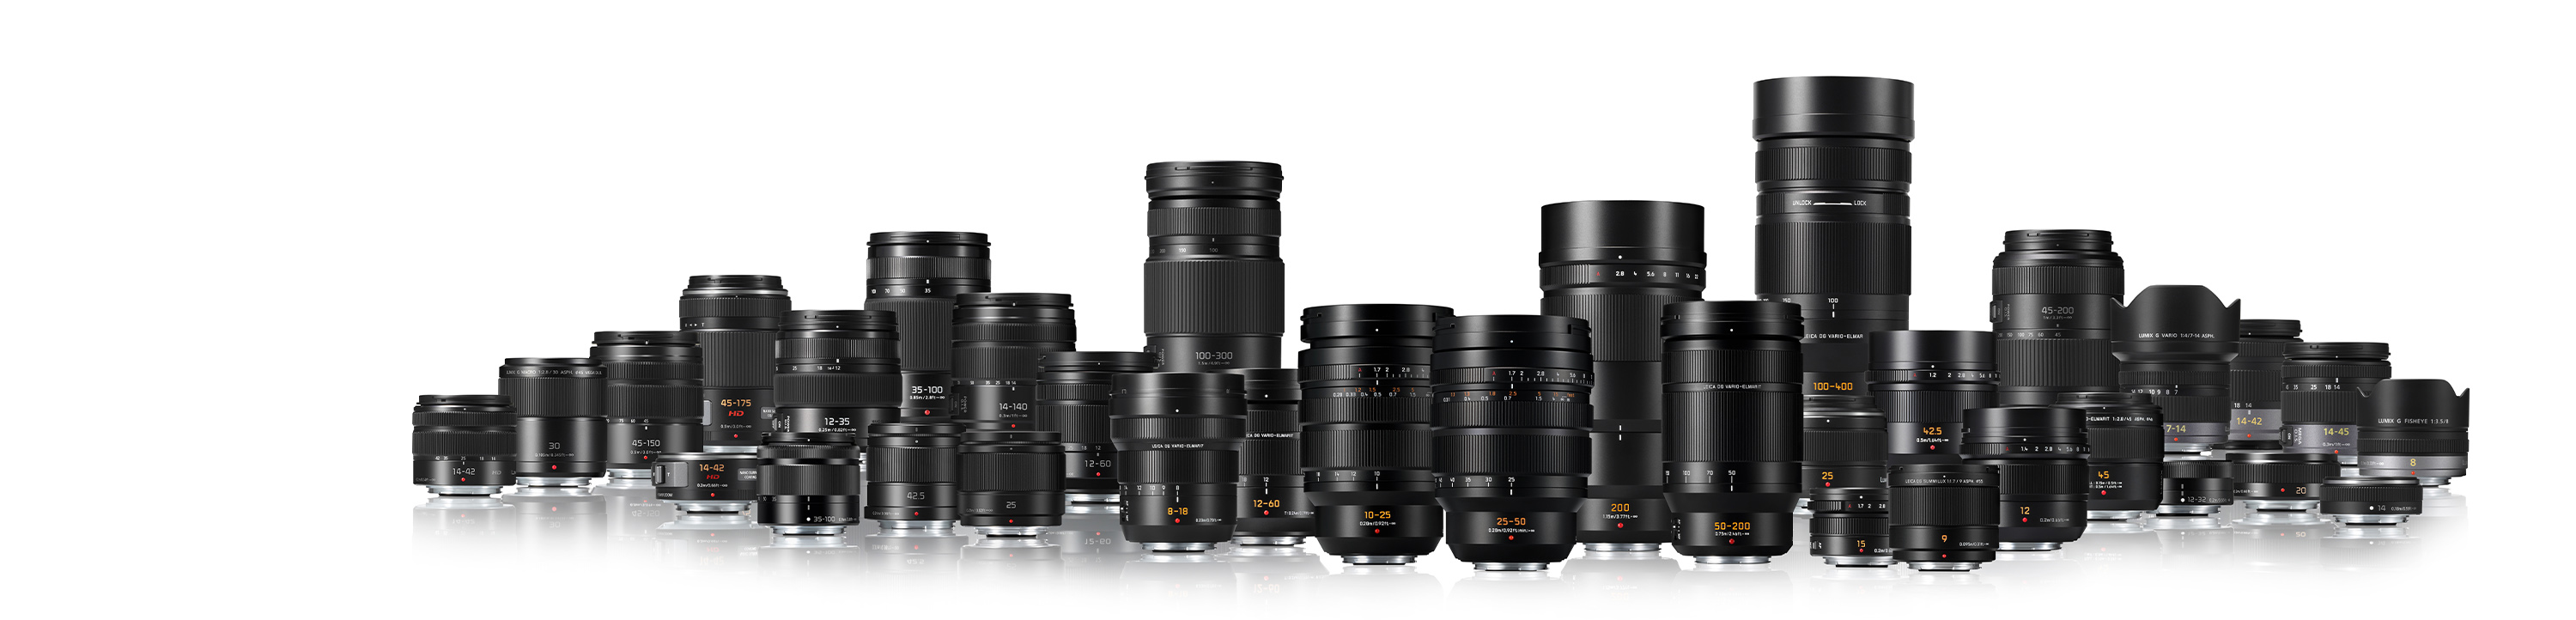 LUMIX G Series lens collection